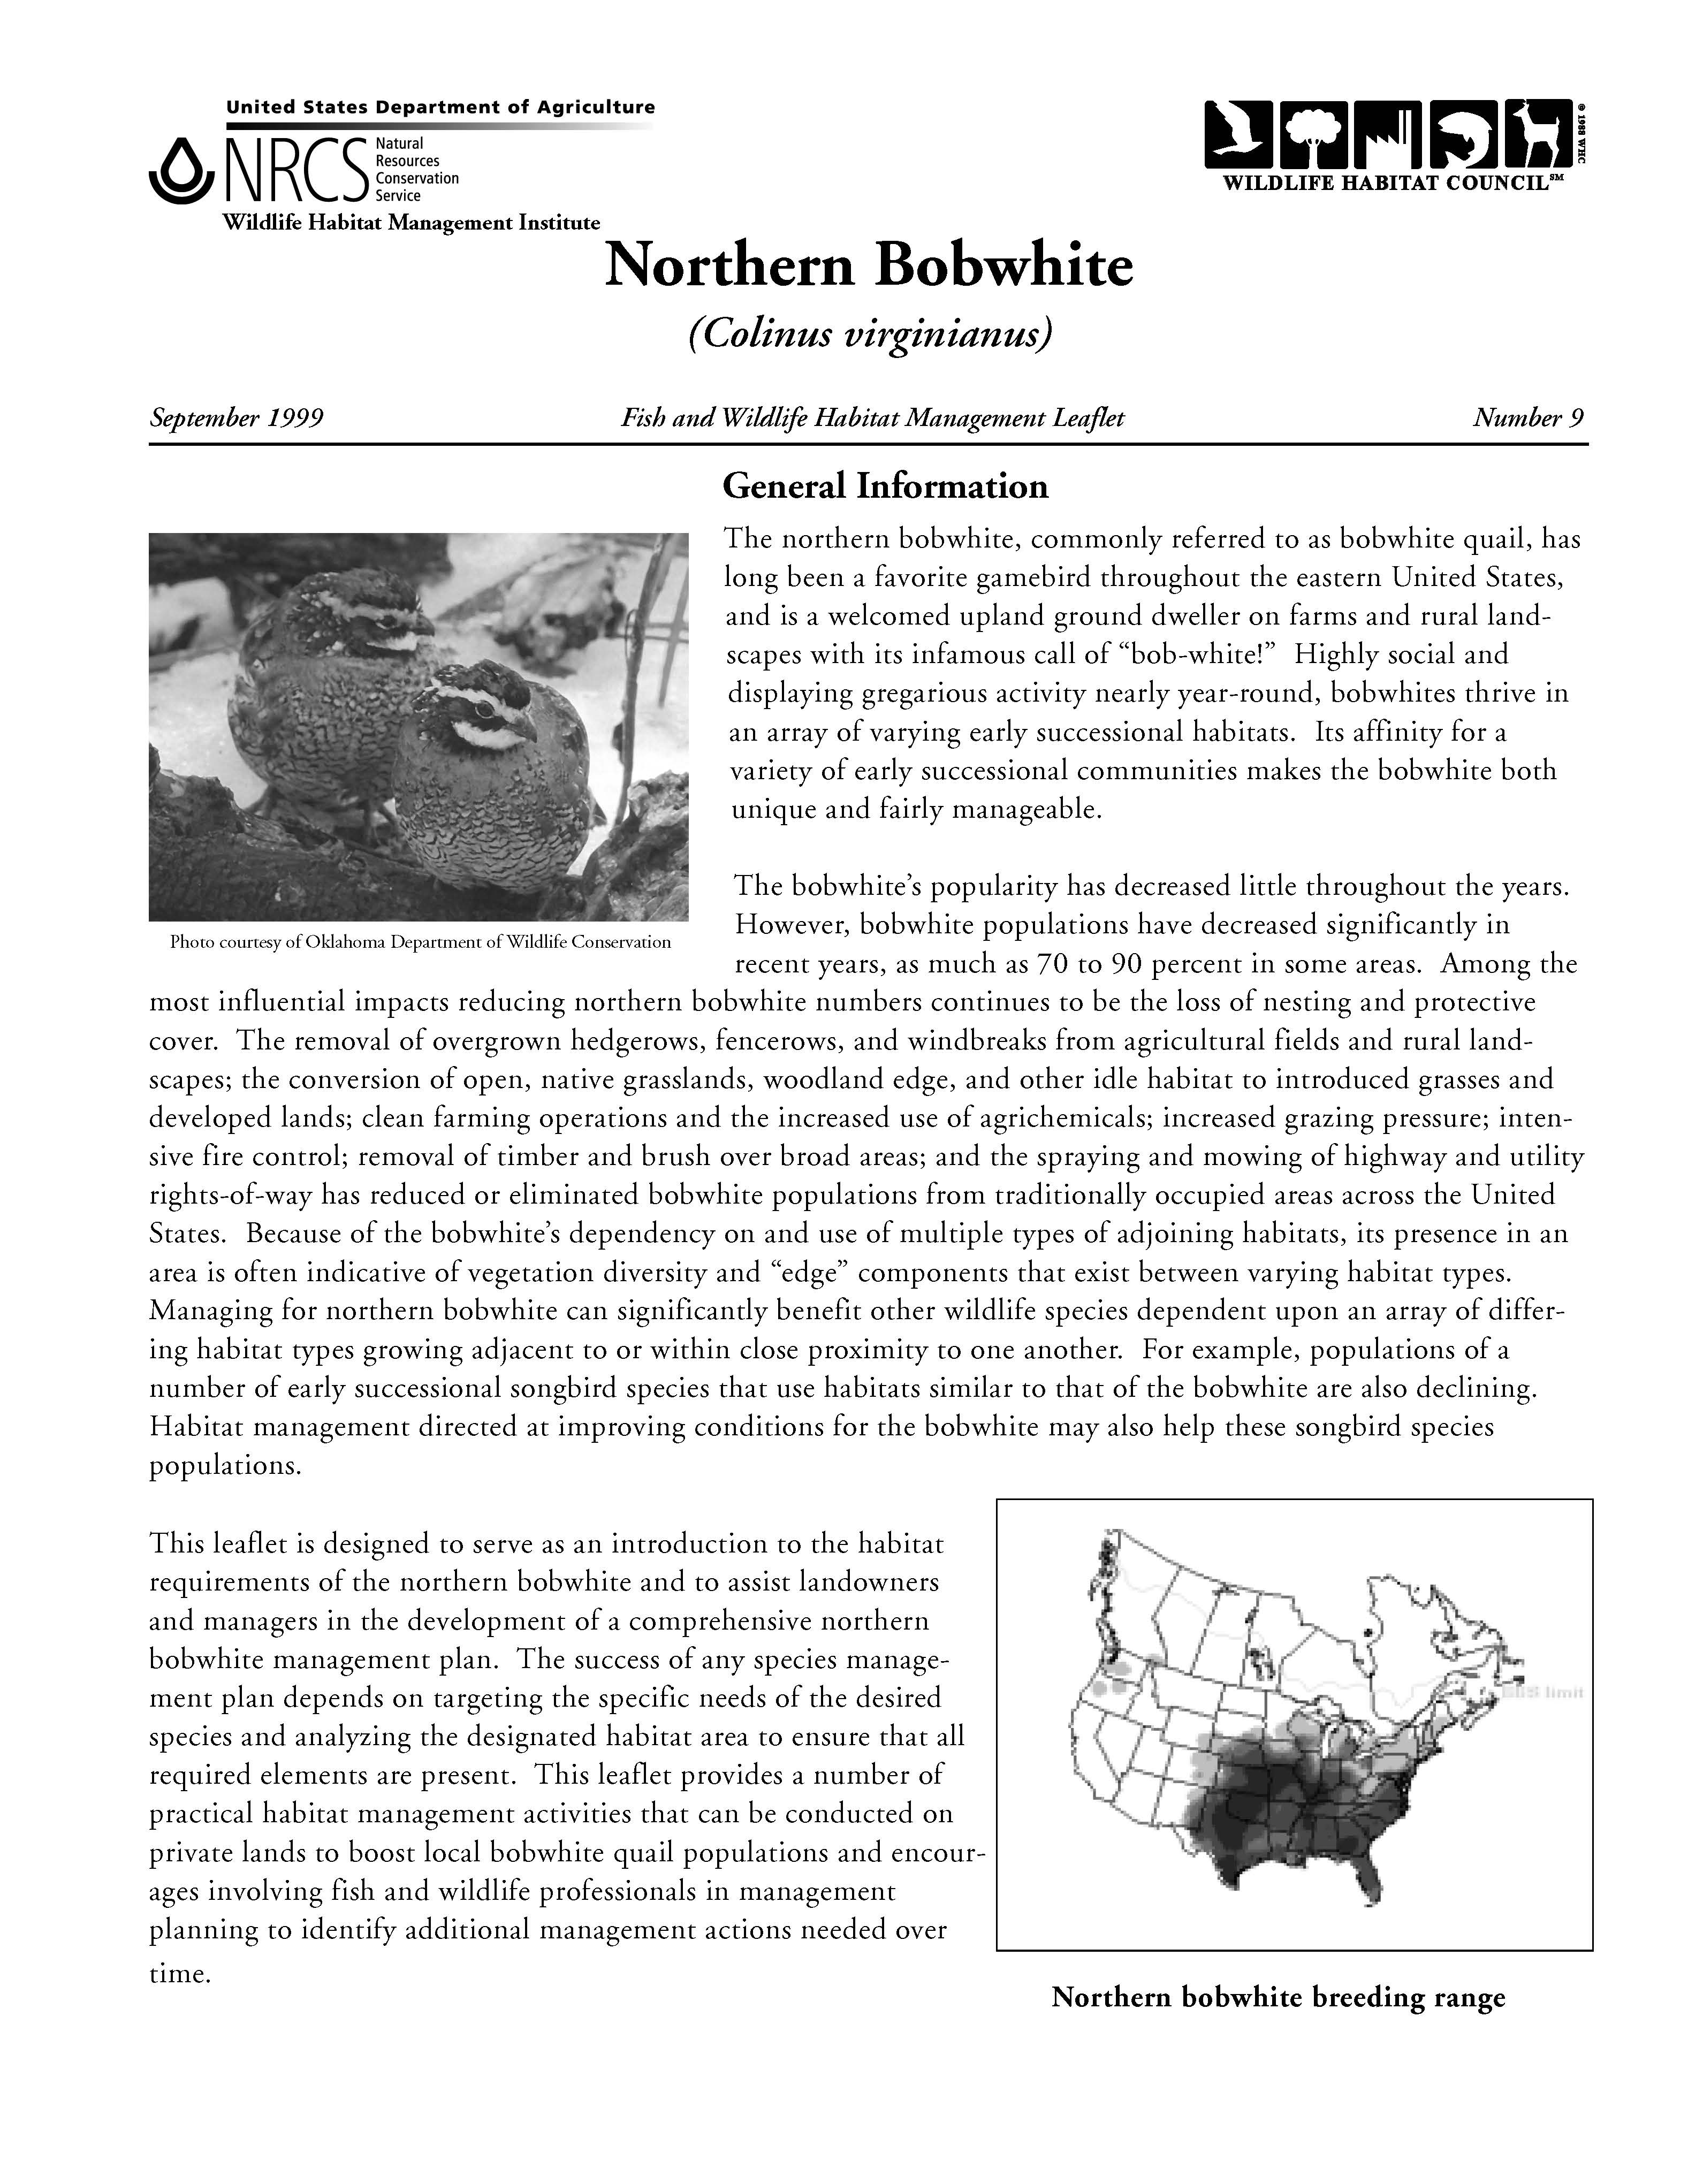 Northern Bobwhite Quail brochure